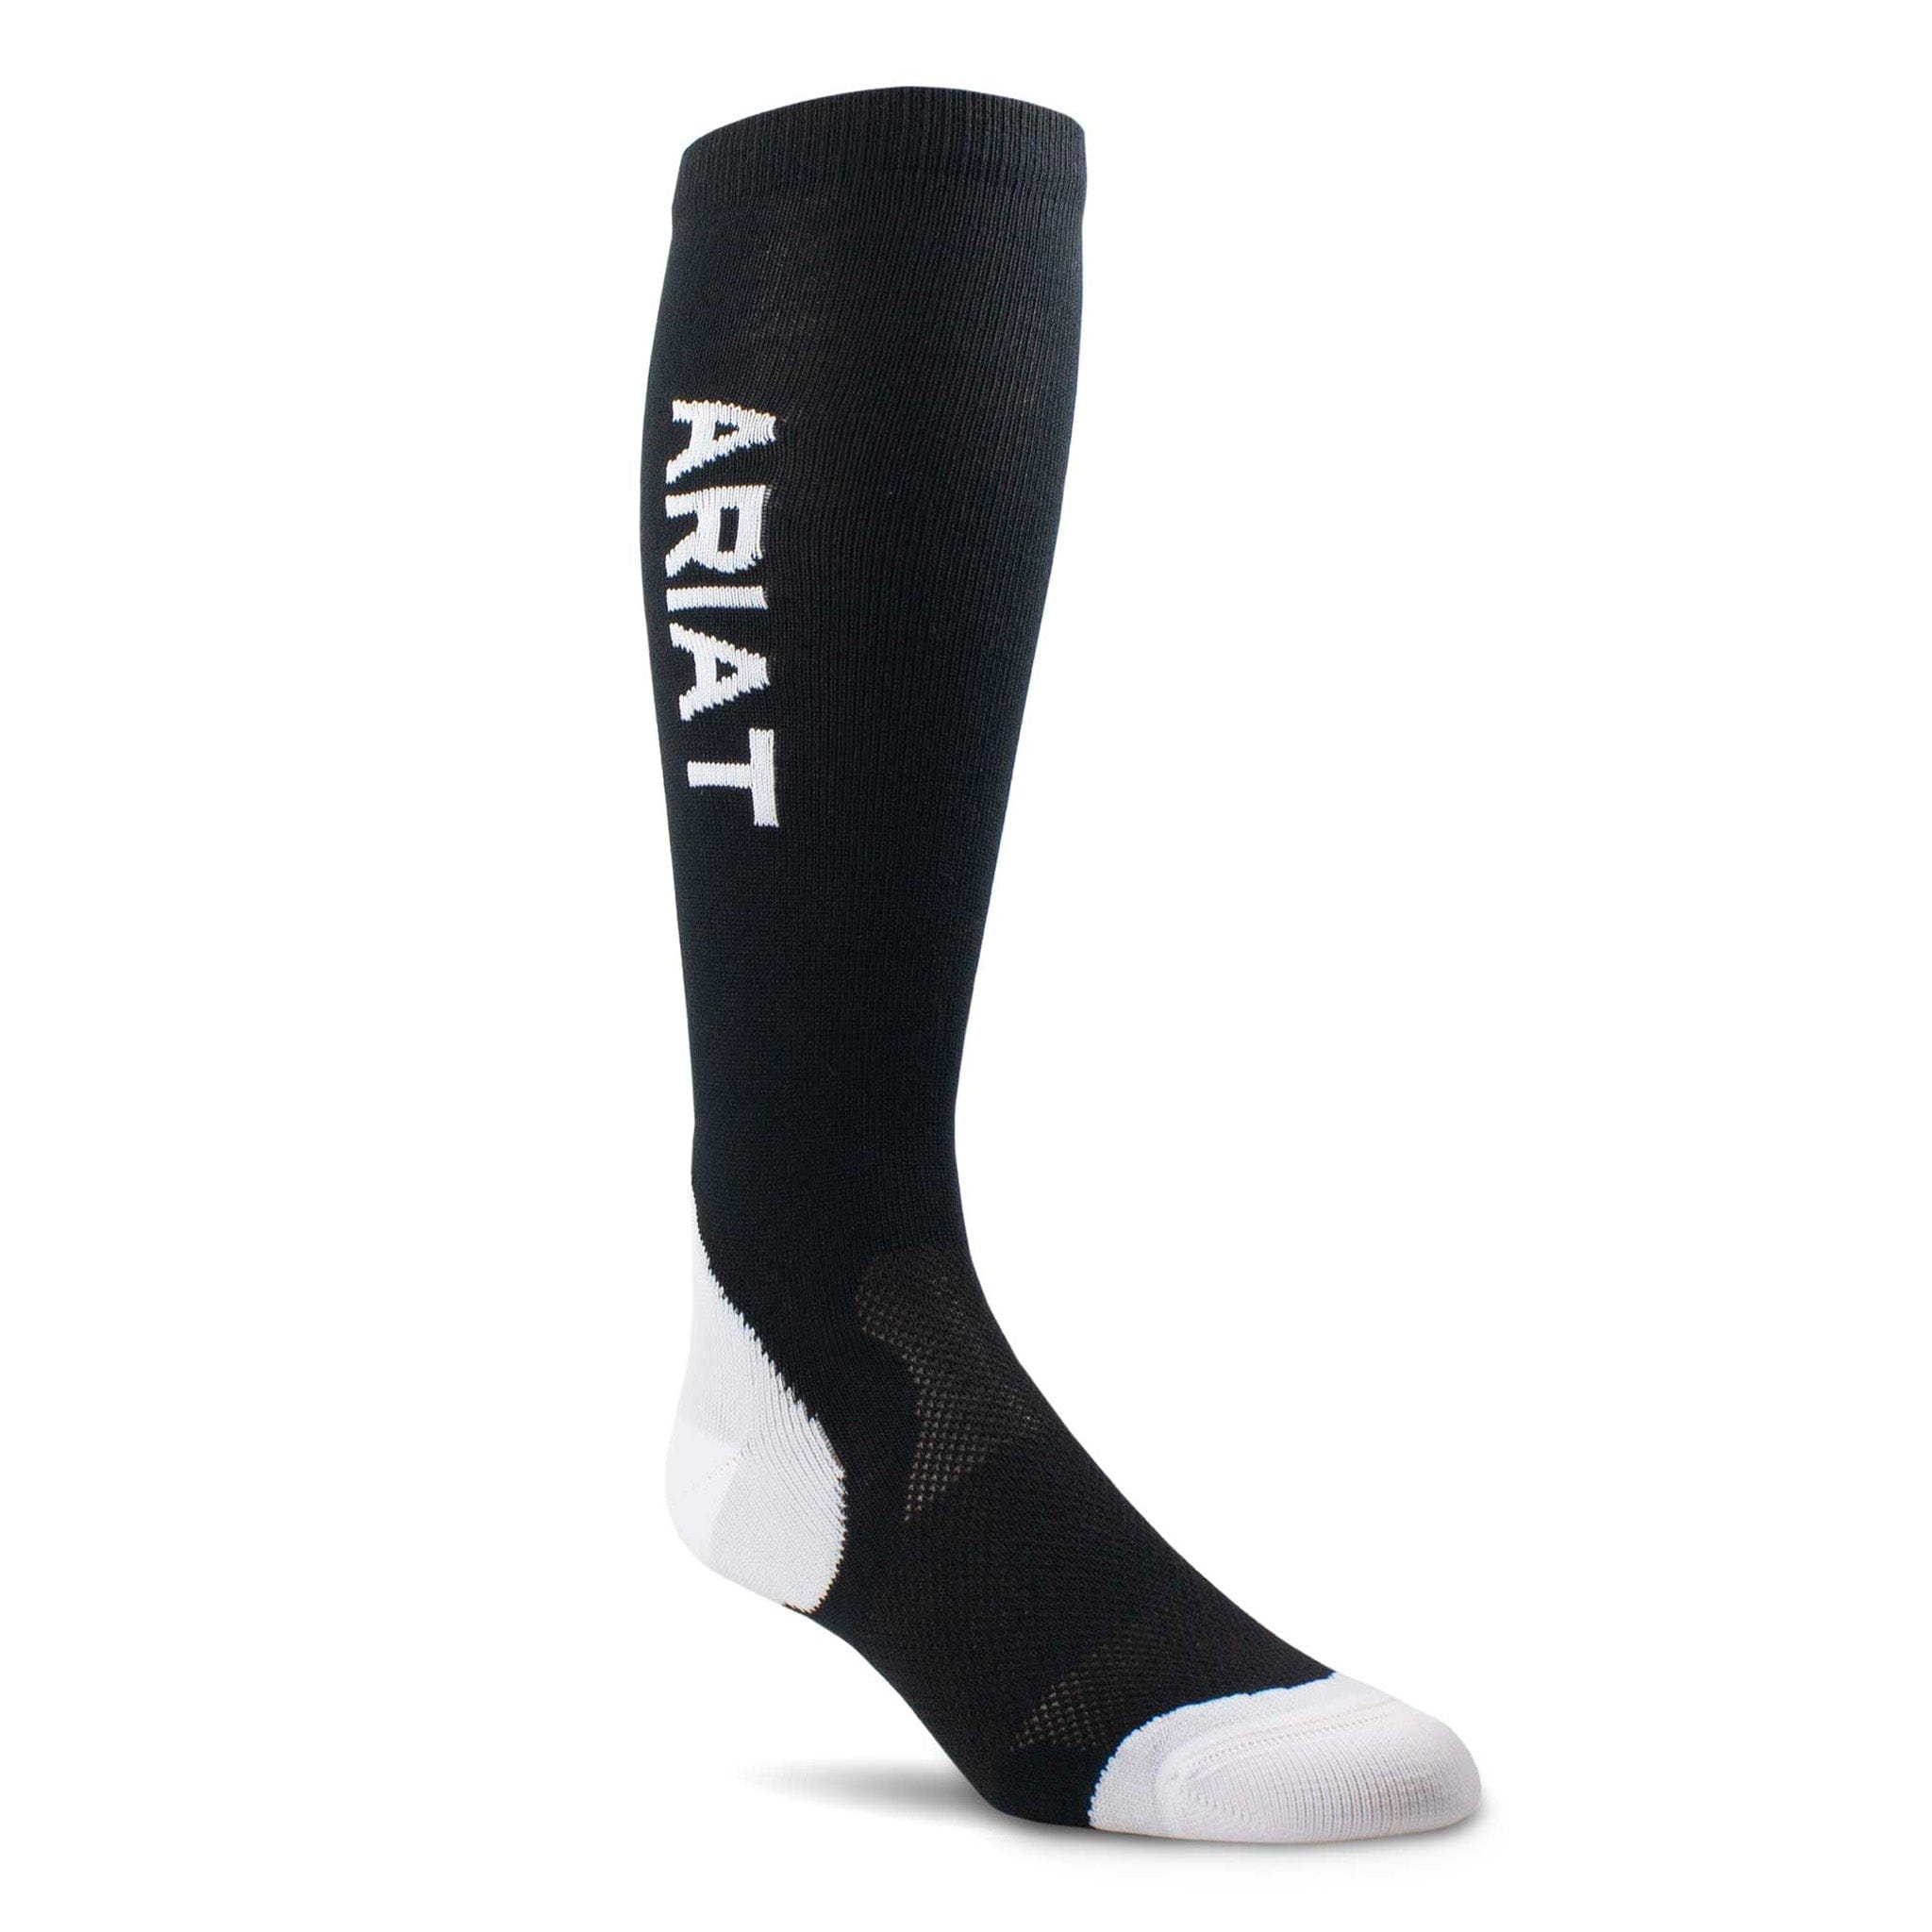 Ariat AriatTEK Performance Riding Socks 10021154 Black and White Outer Calf Side